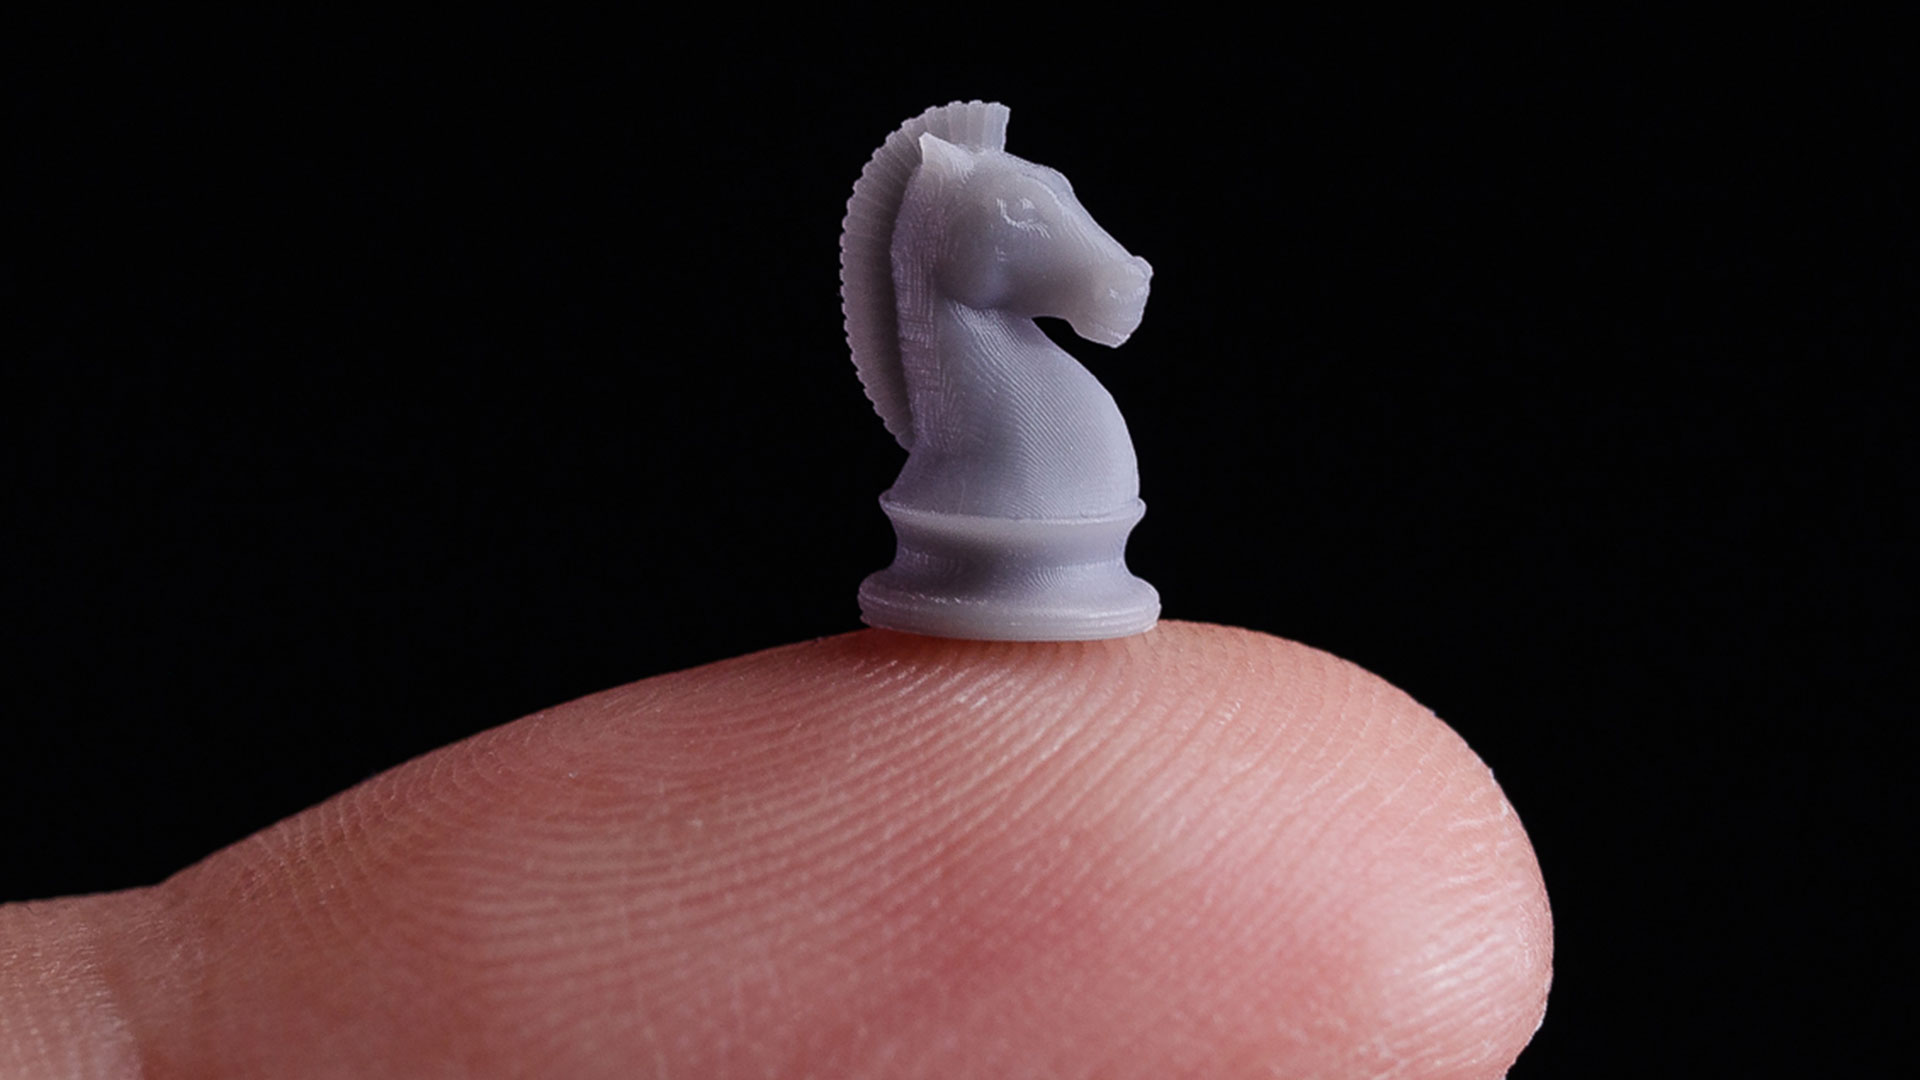 Miniature of horse chess piece on fingertip